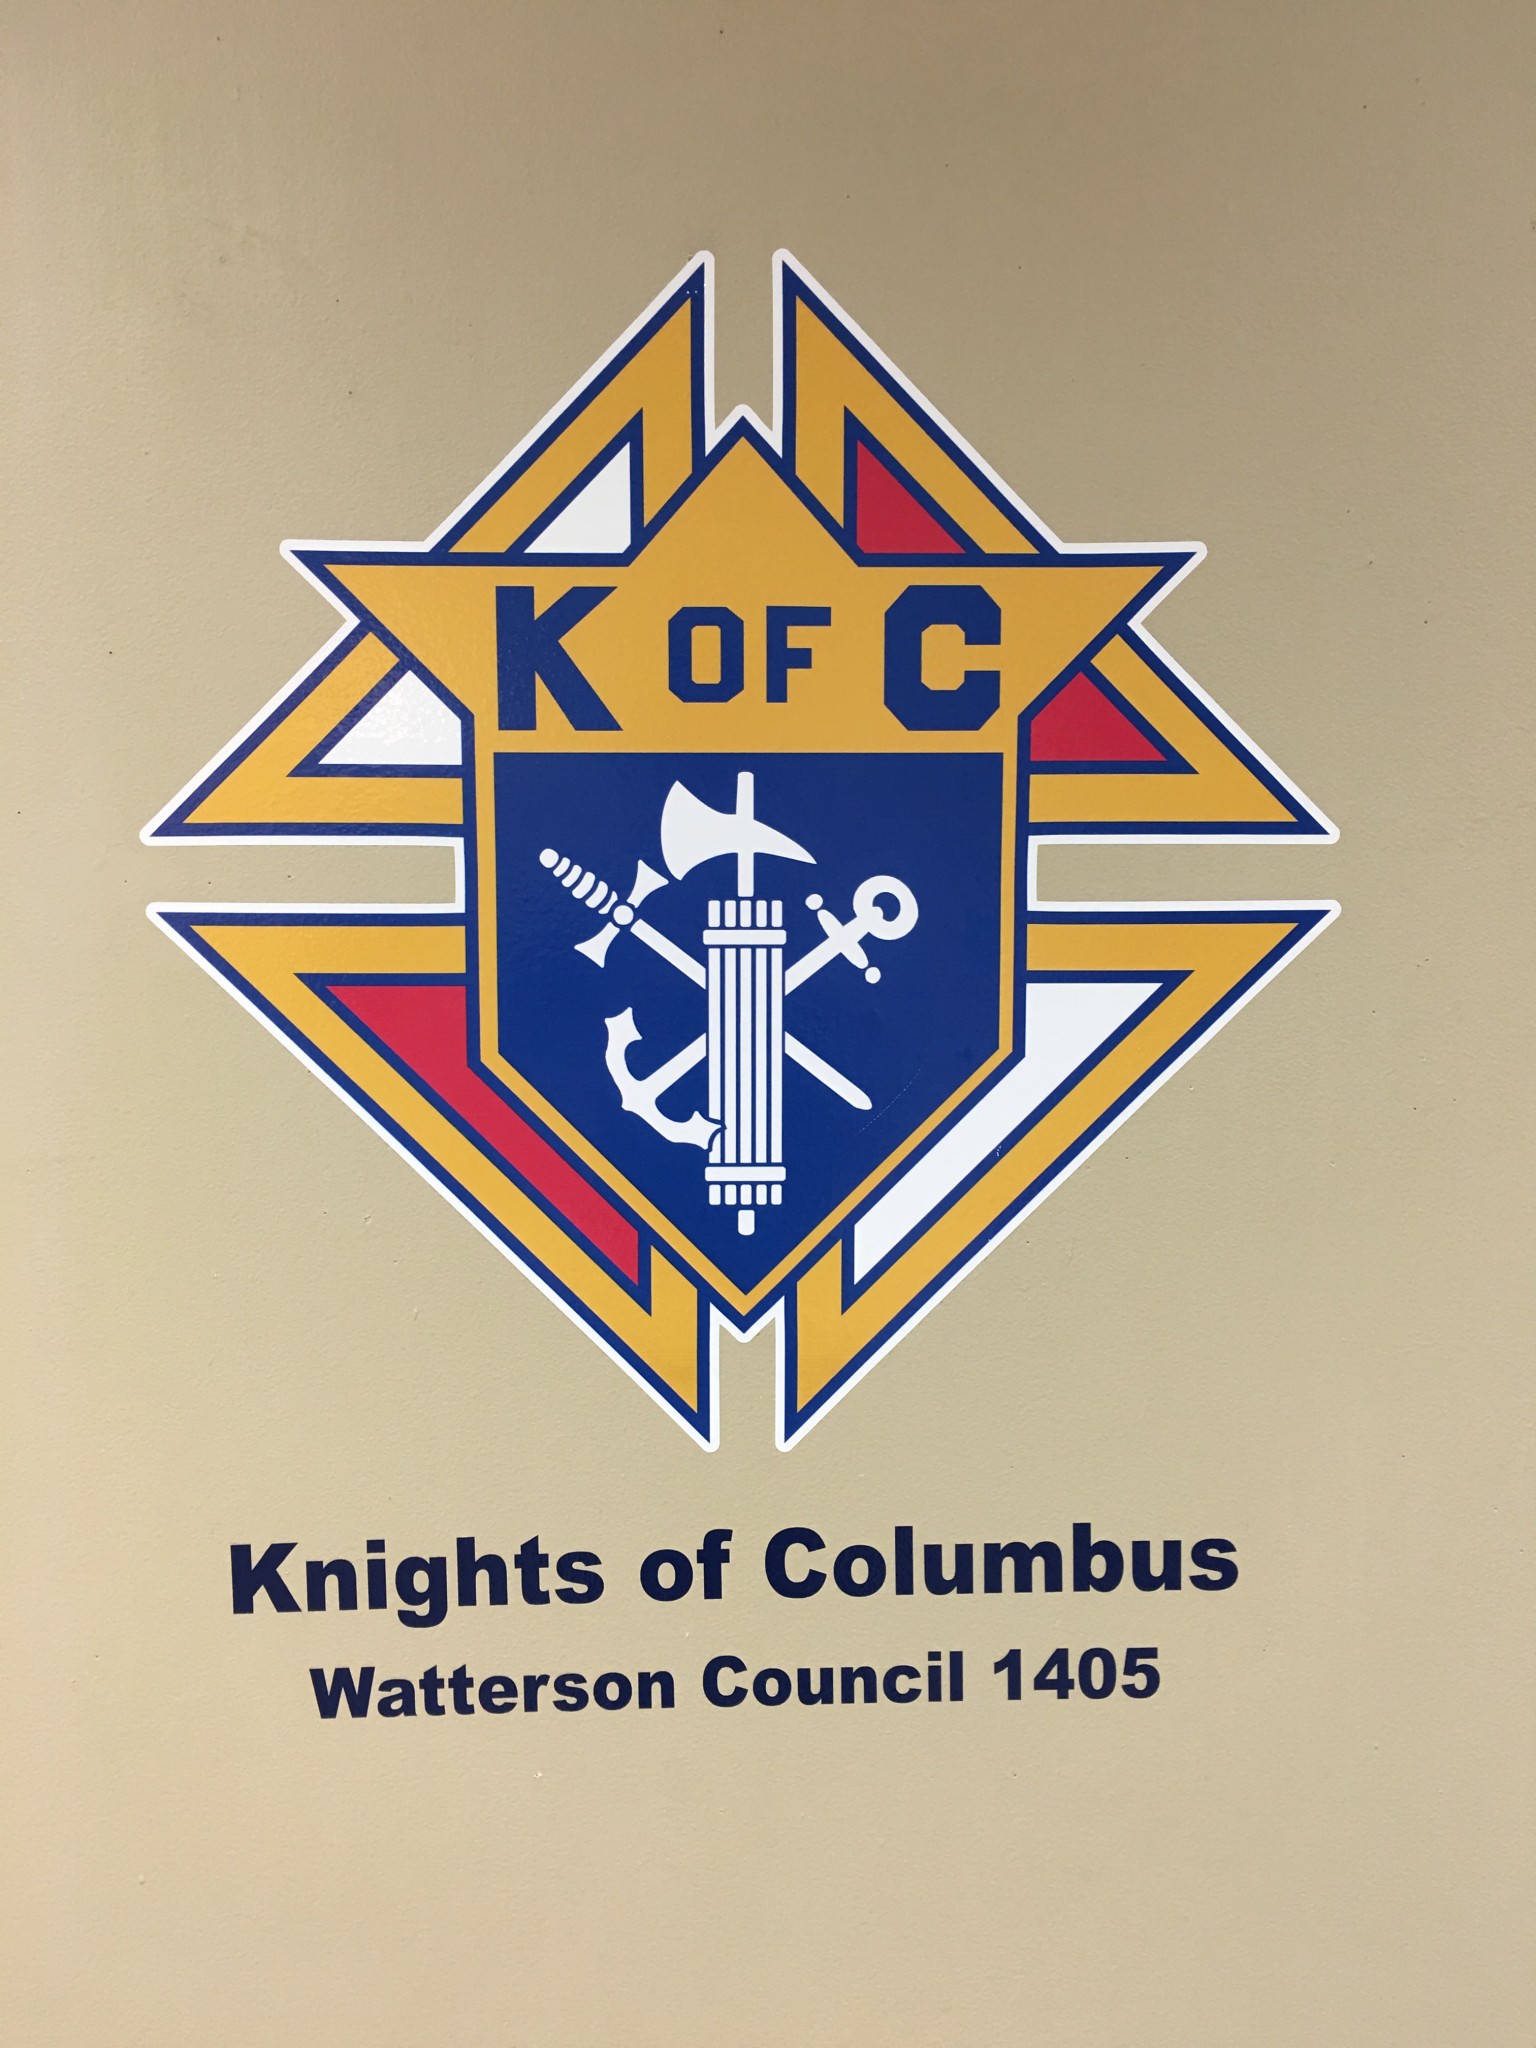 Two Nights at Knights of Columbus